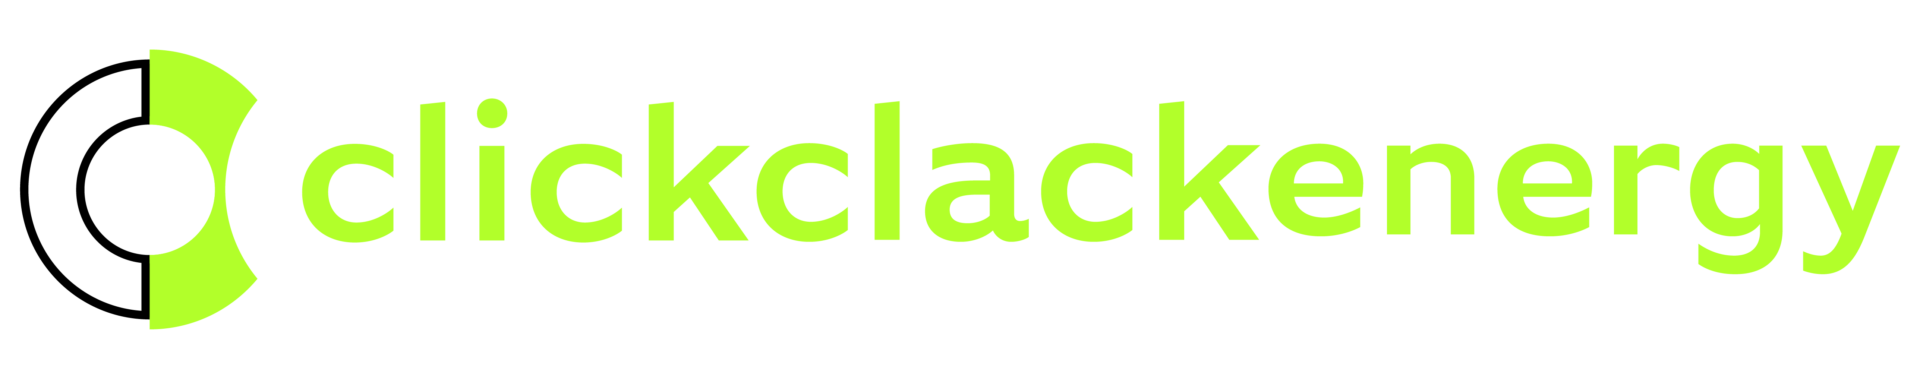 clickclackenergy